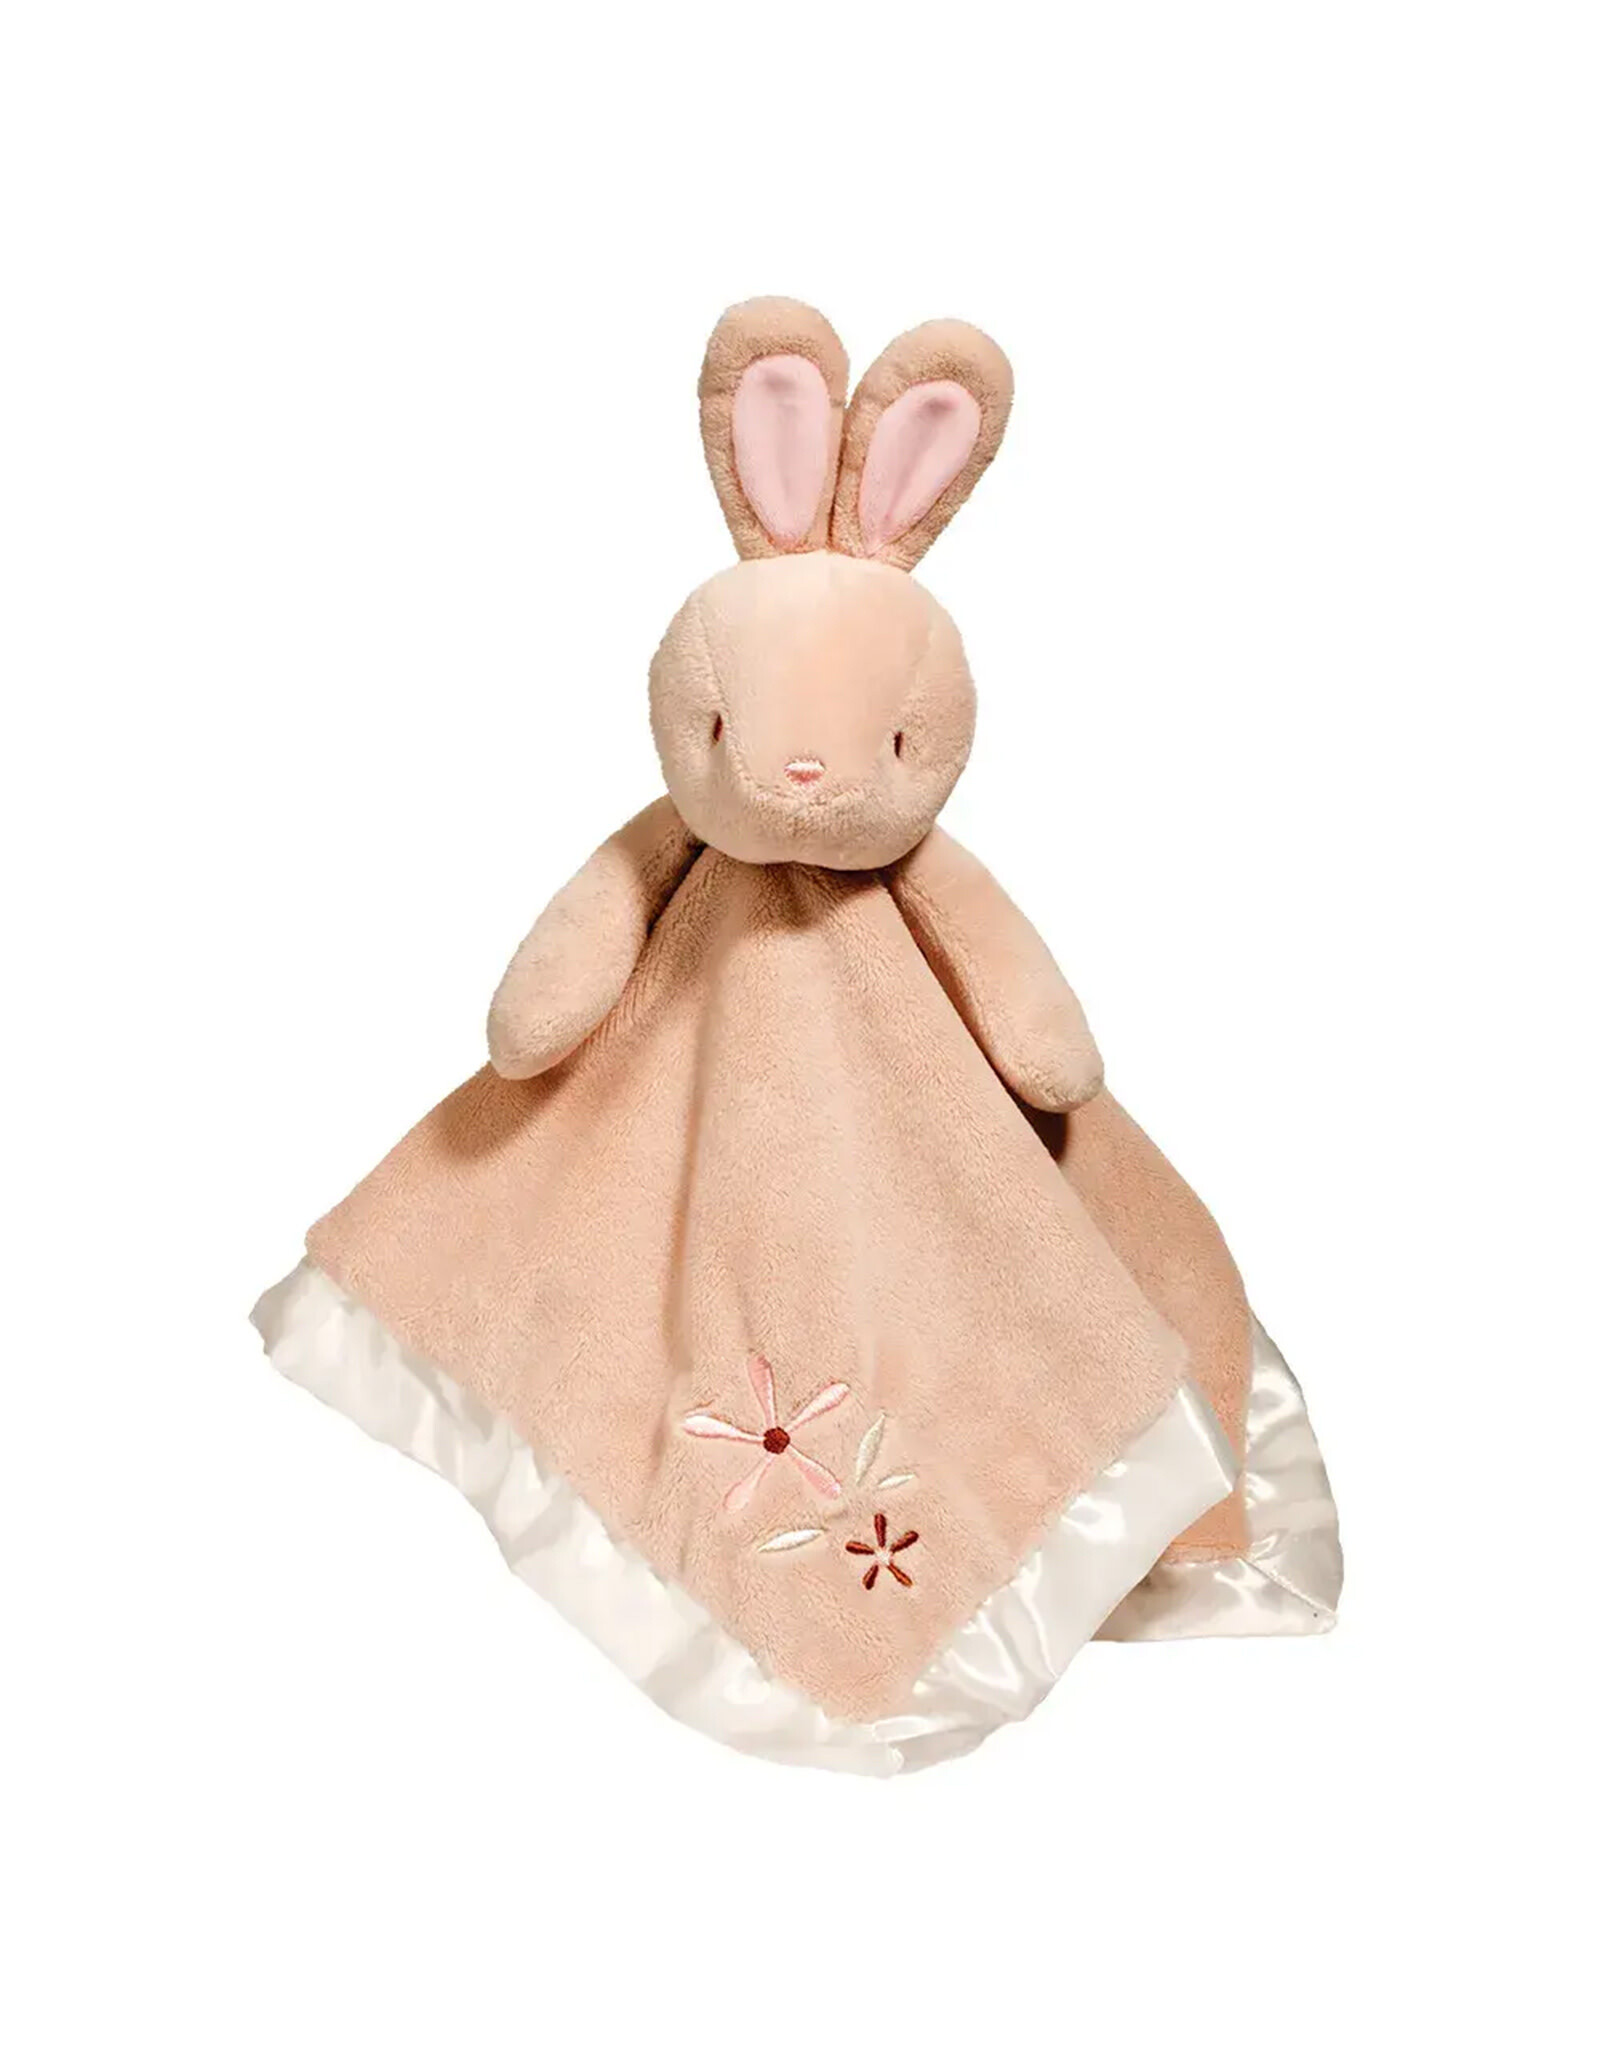 Douglas Douglas Cuddle Toys Baby Bunny Lil' Snuggler